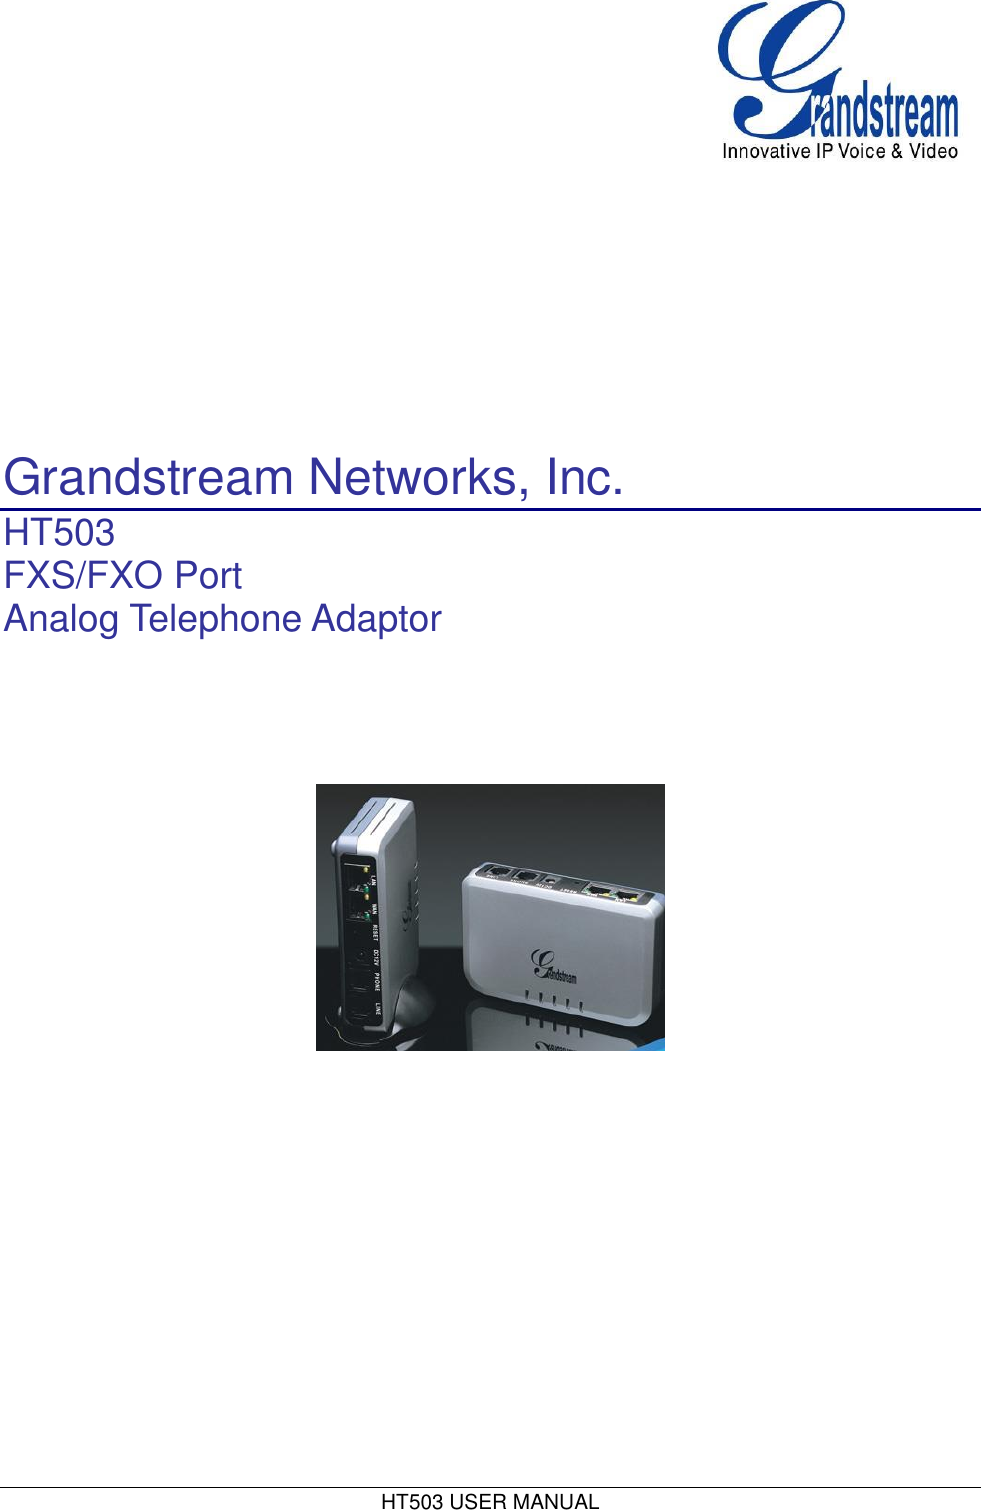 HT503 USER MANUAL              Grandstream Networks, Inc. HT503 FXS/FXO Port  Analog Telephone Adaptor             